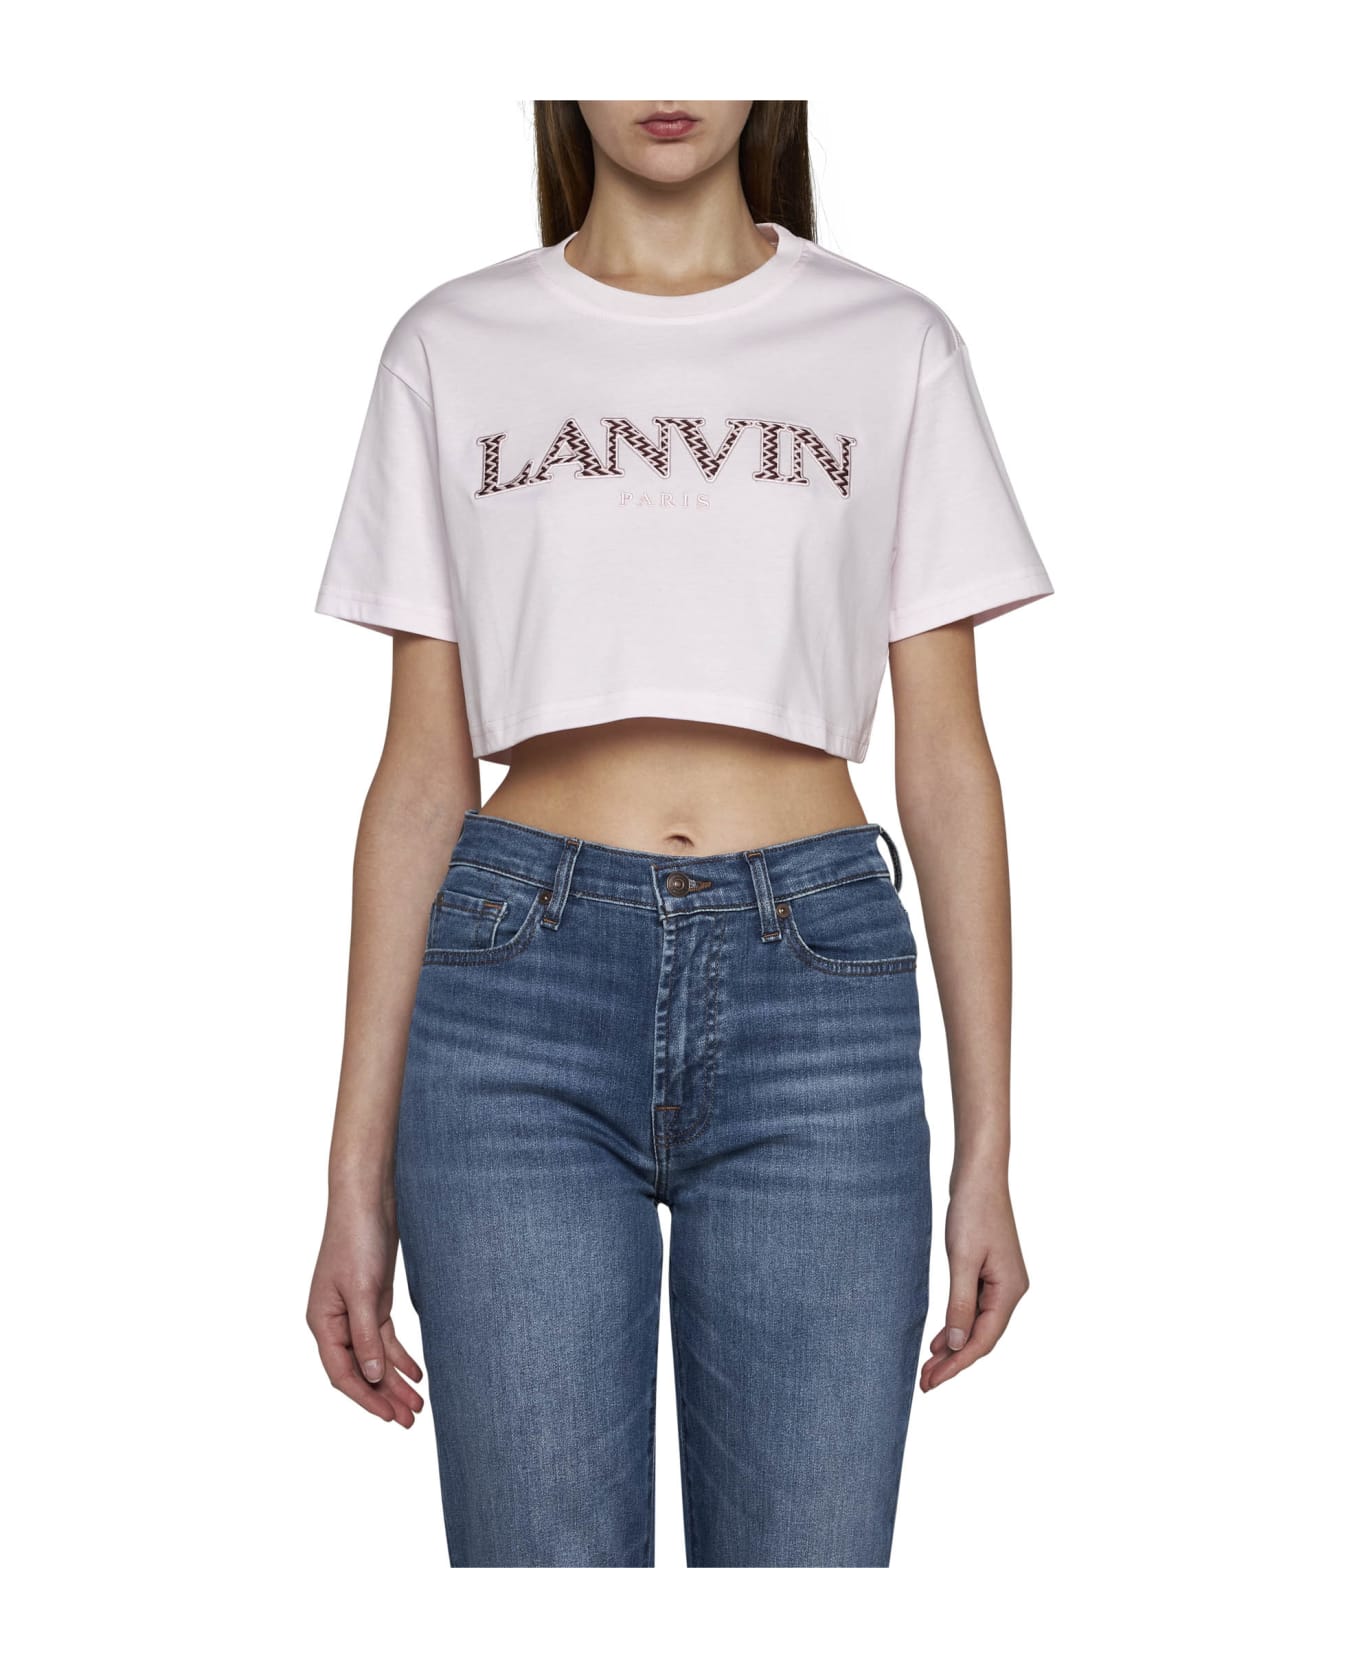 Lanvin T-Shirt - Pink 2 Tシャツ